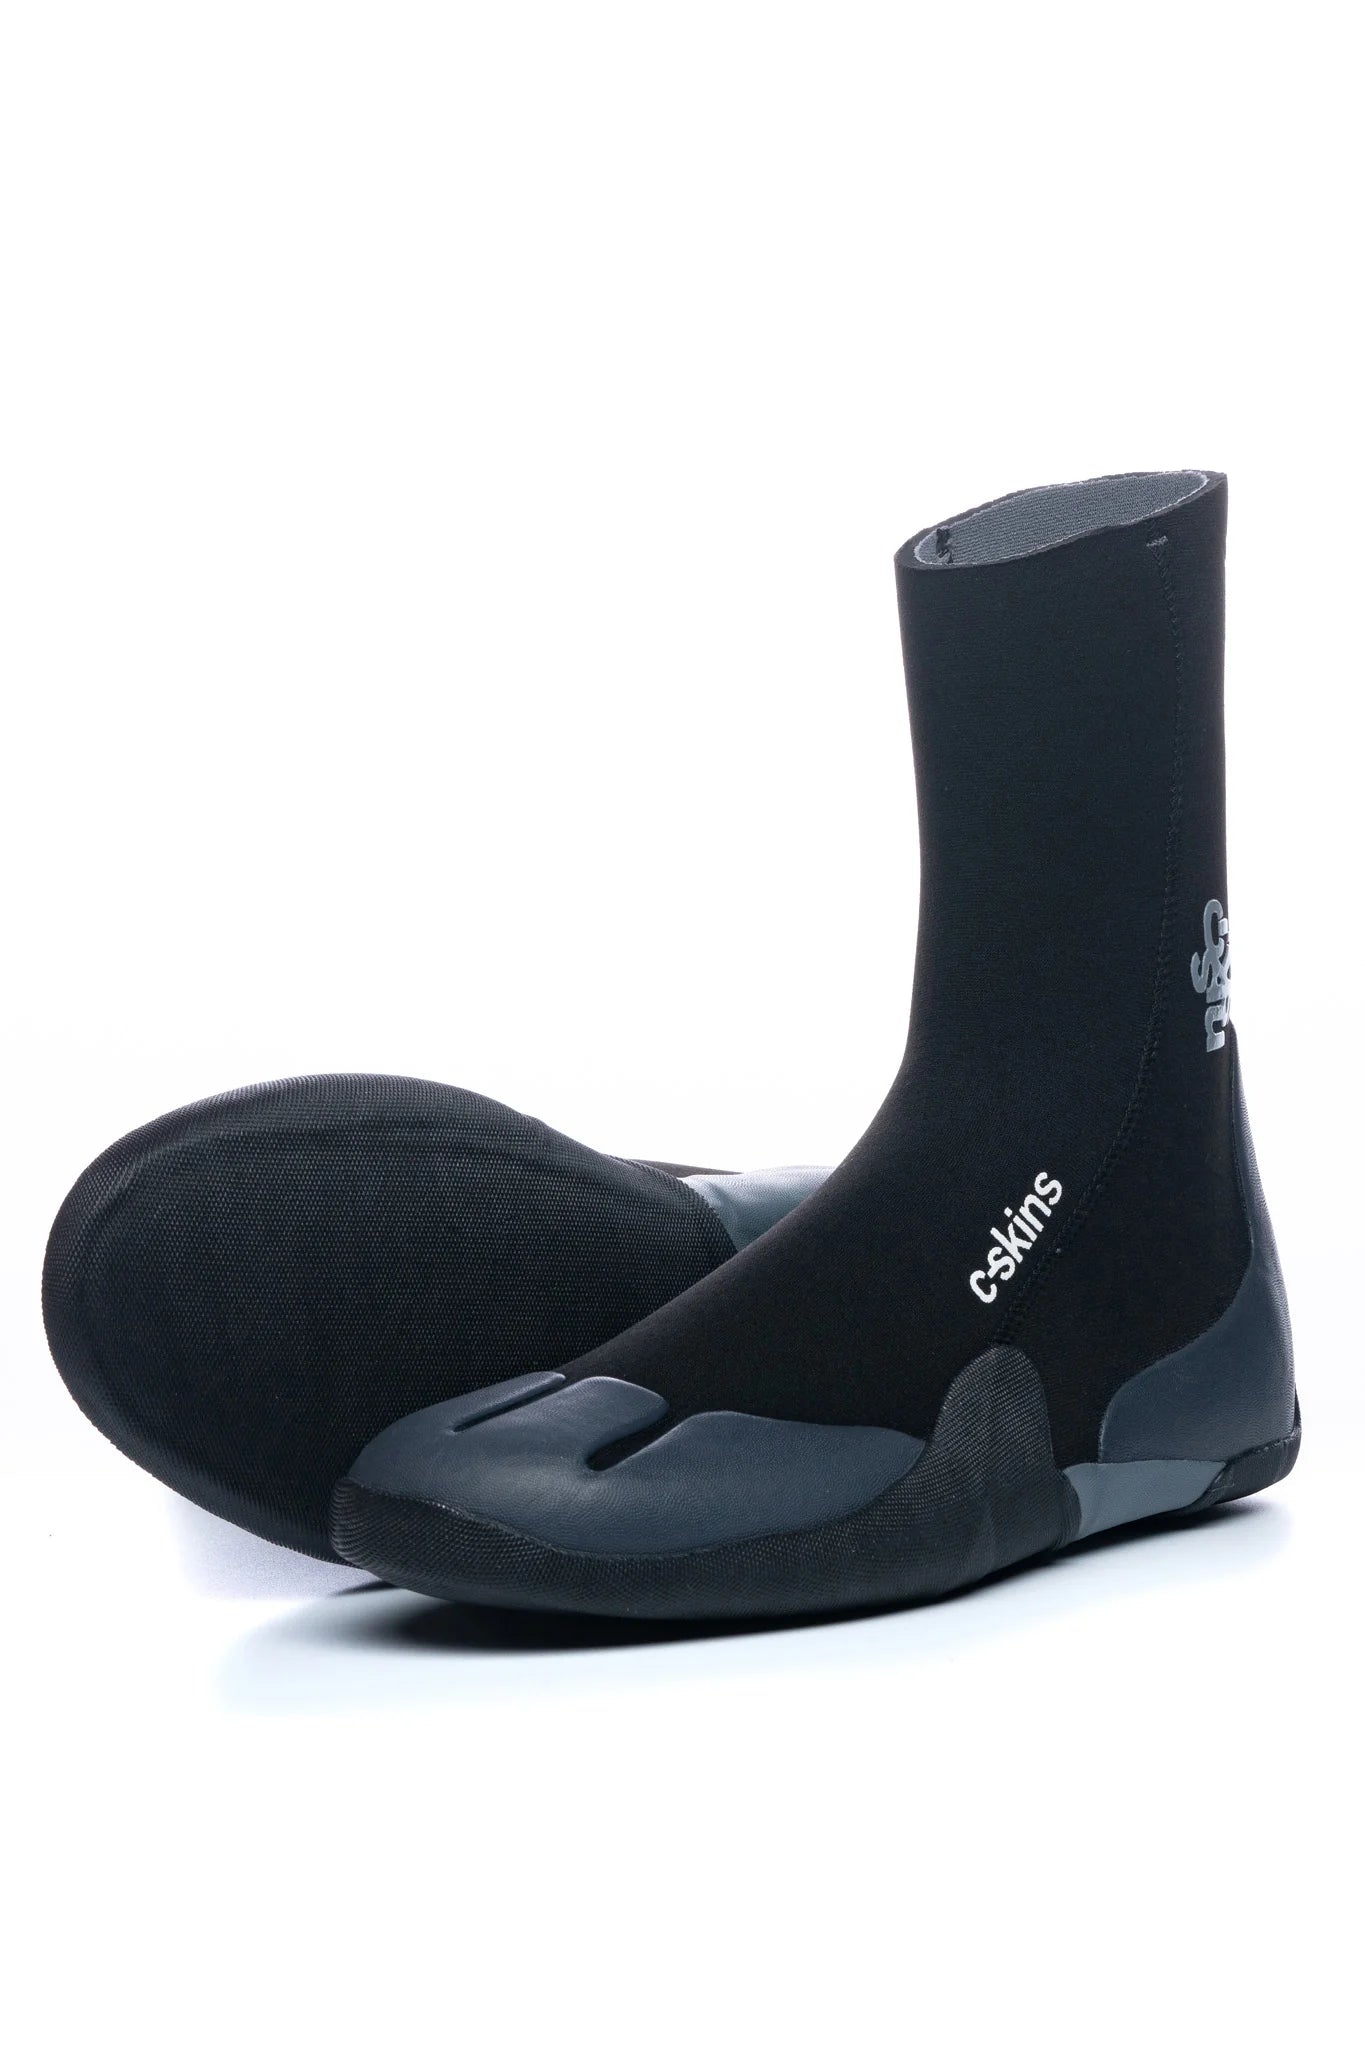 C-Skins Legend 5mm Adult Round Toe Boots - Black/Charcoal